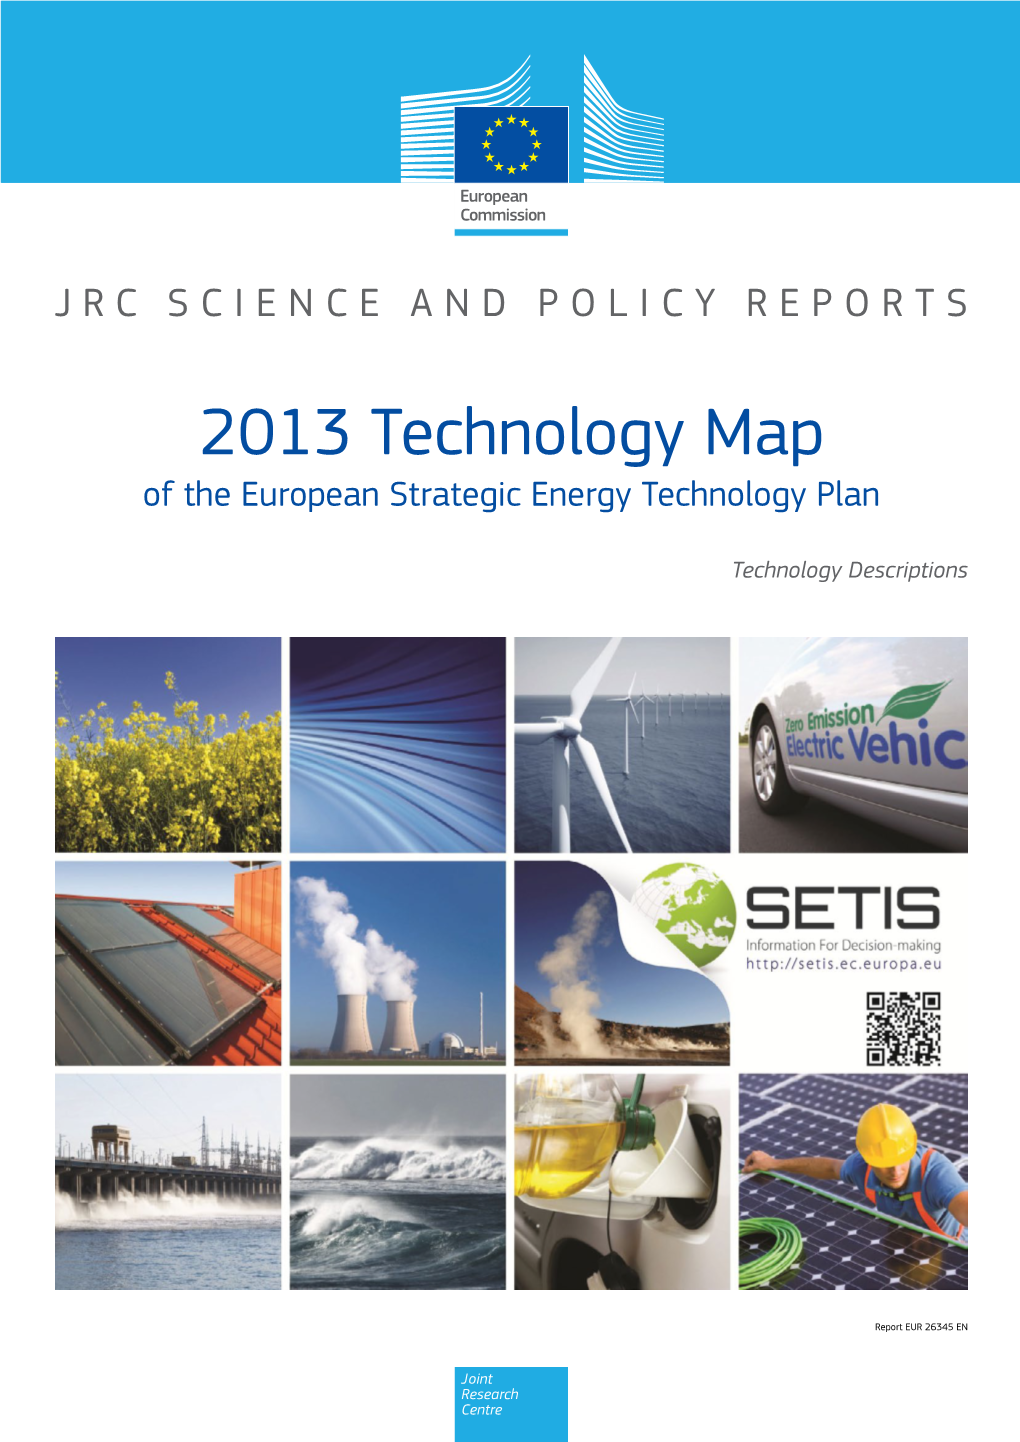 2013 Technology Map of the European Strategic Energy Technology Plan